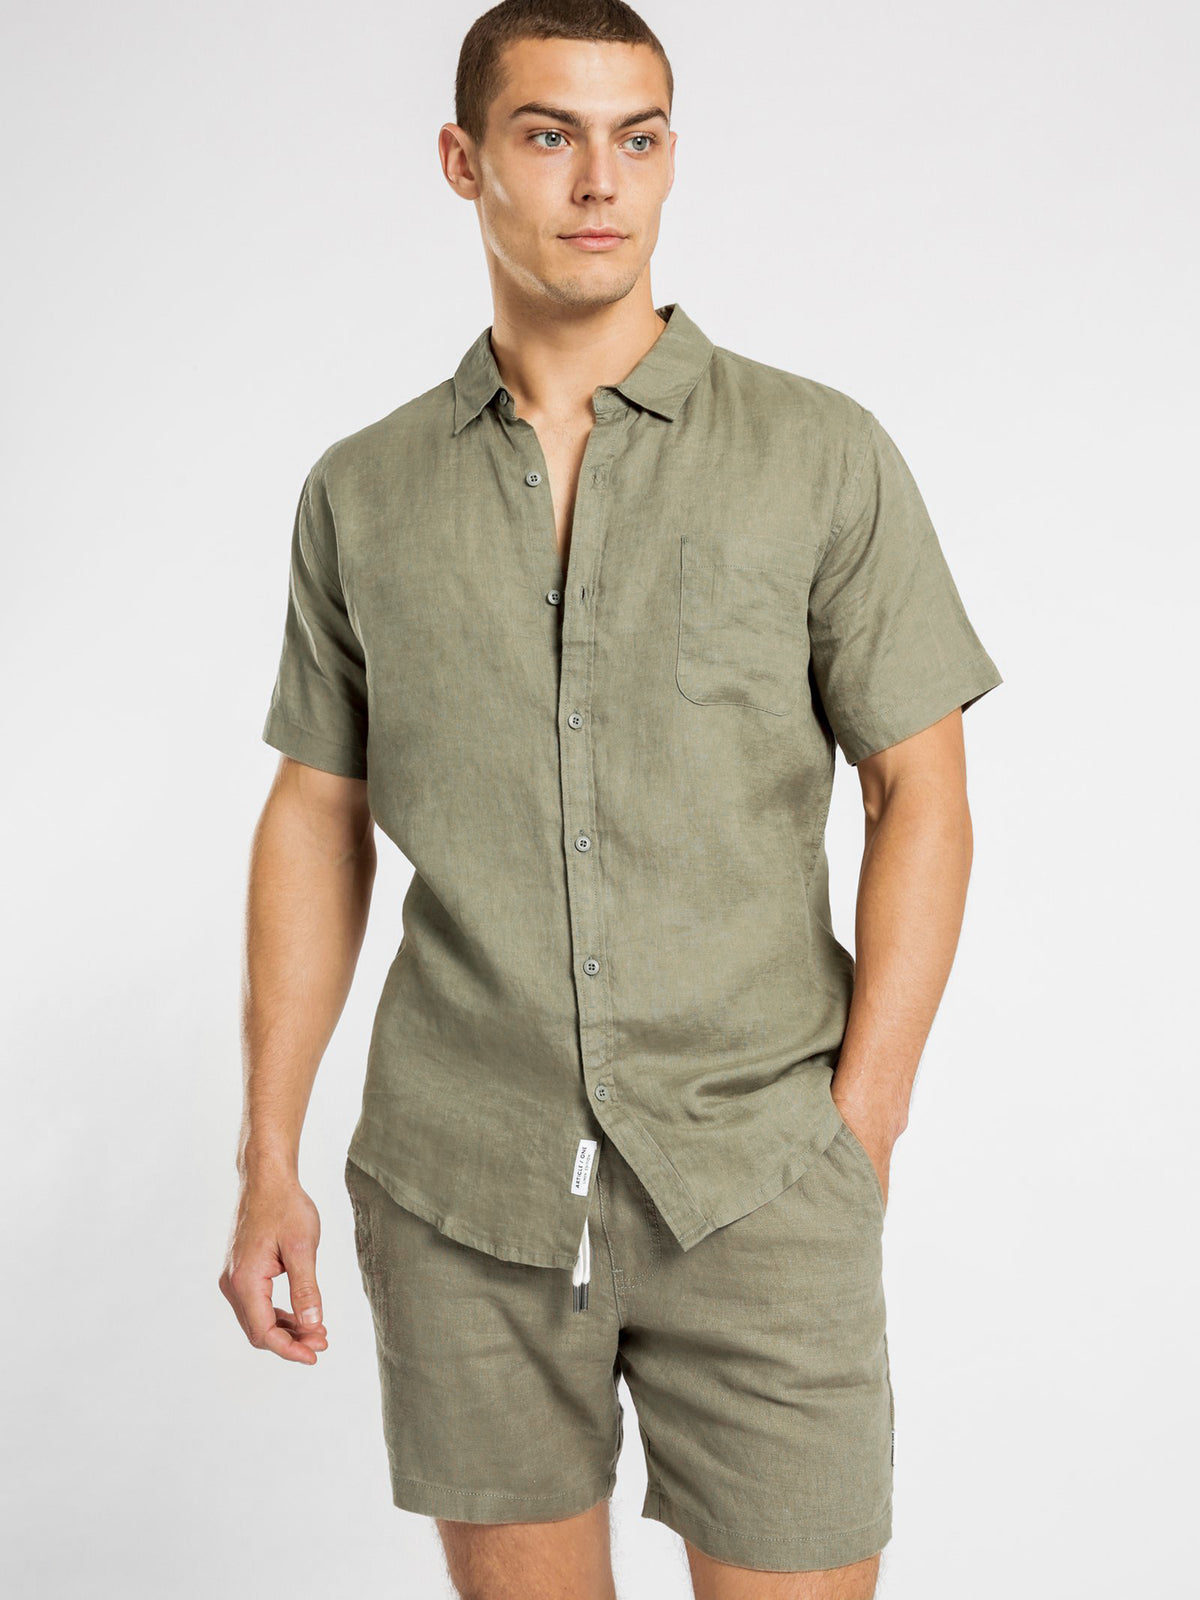 Nelson Short Sleeve Linen Shirt in Thyme